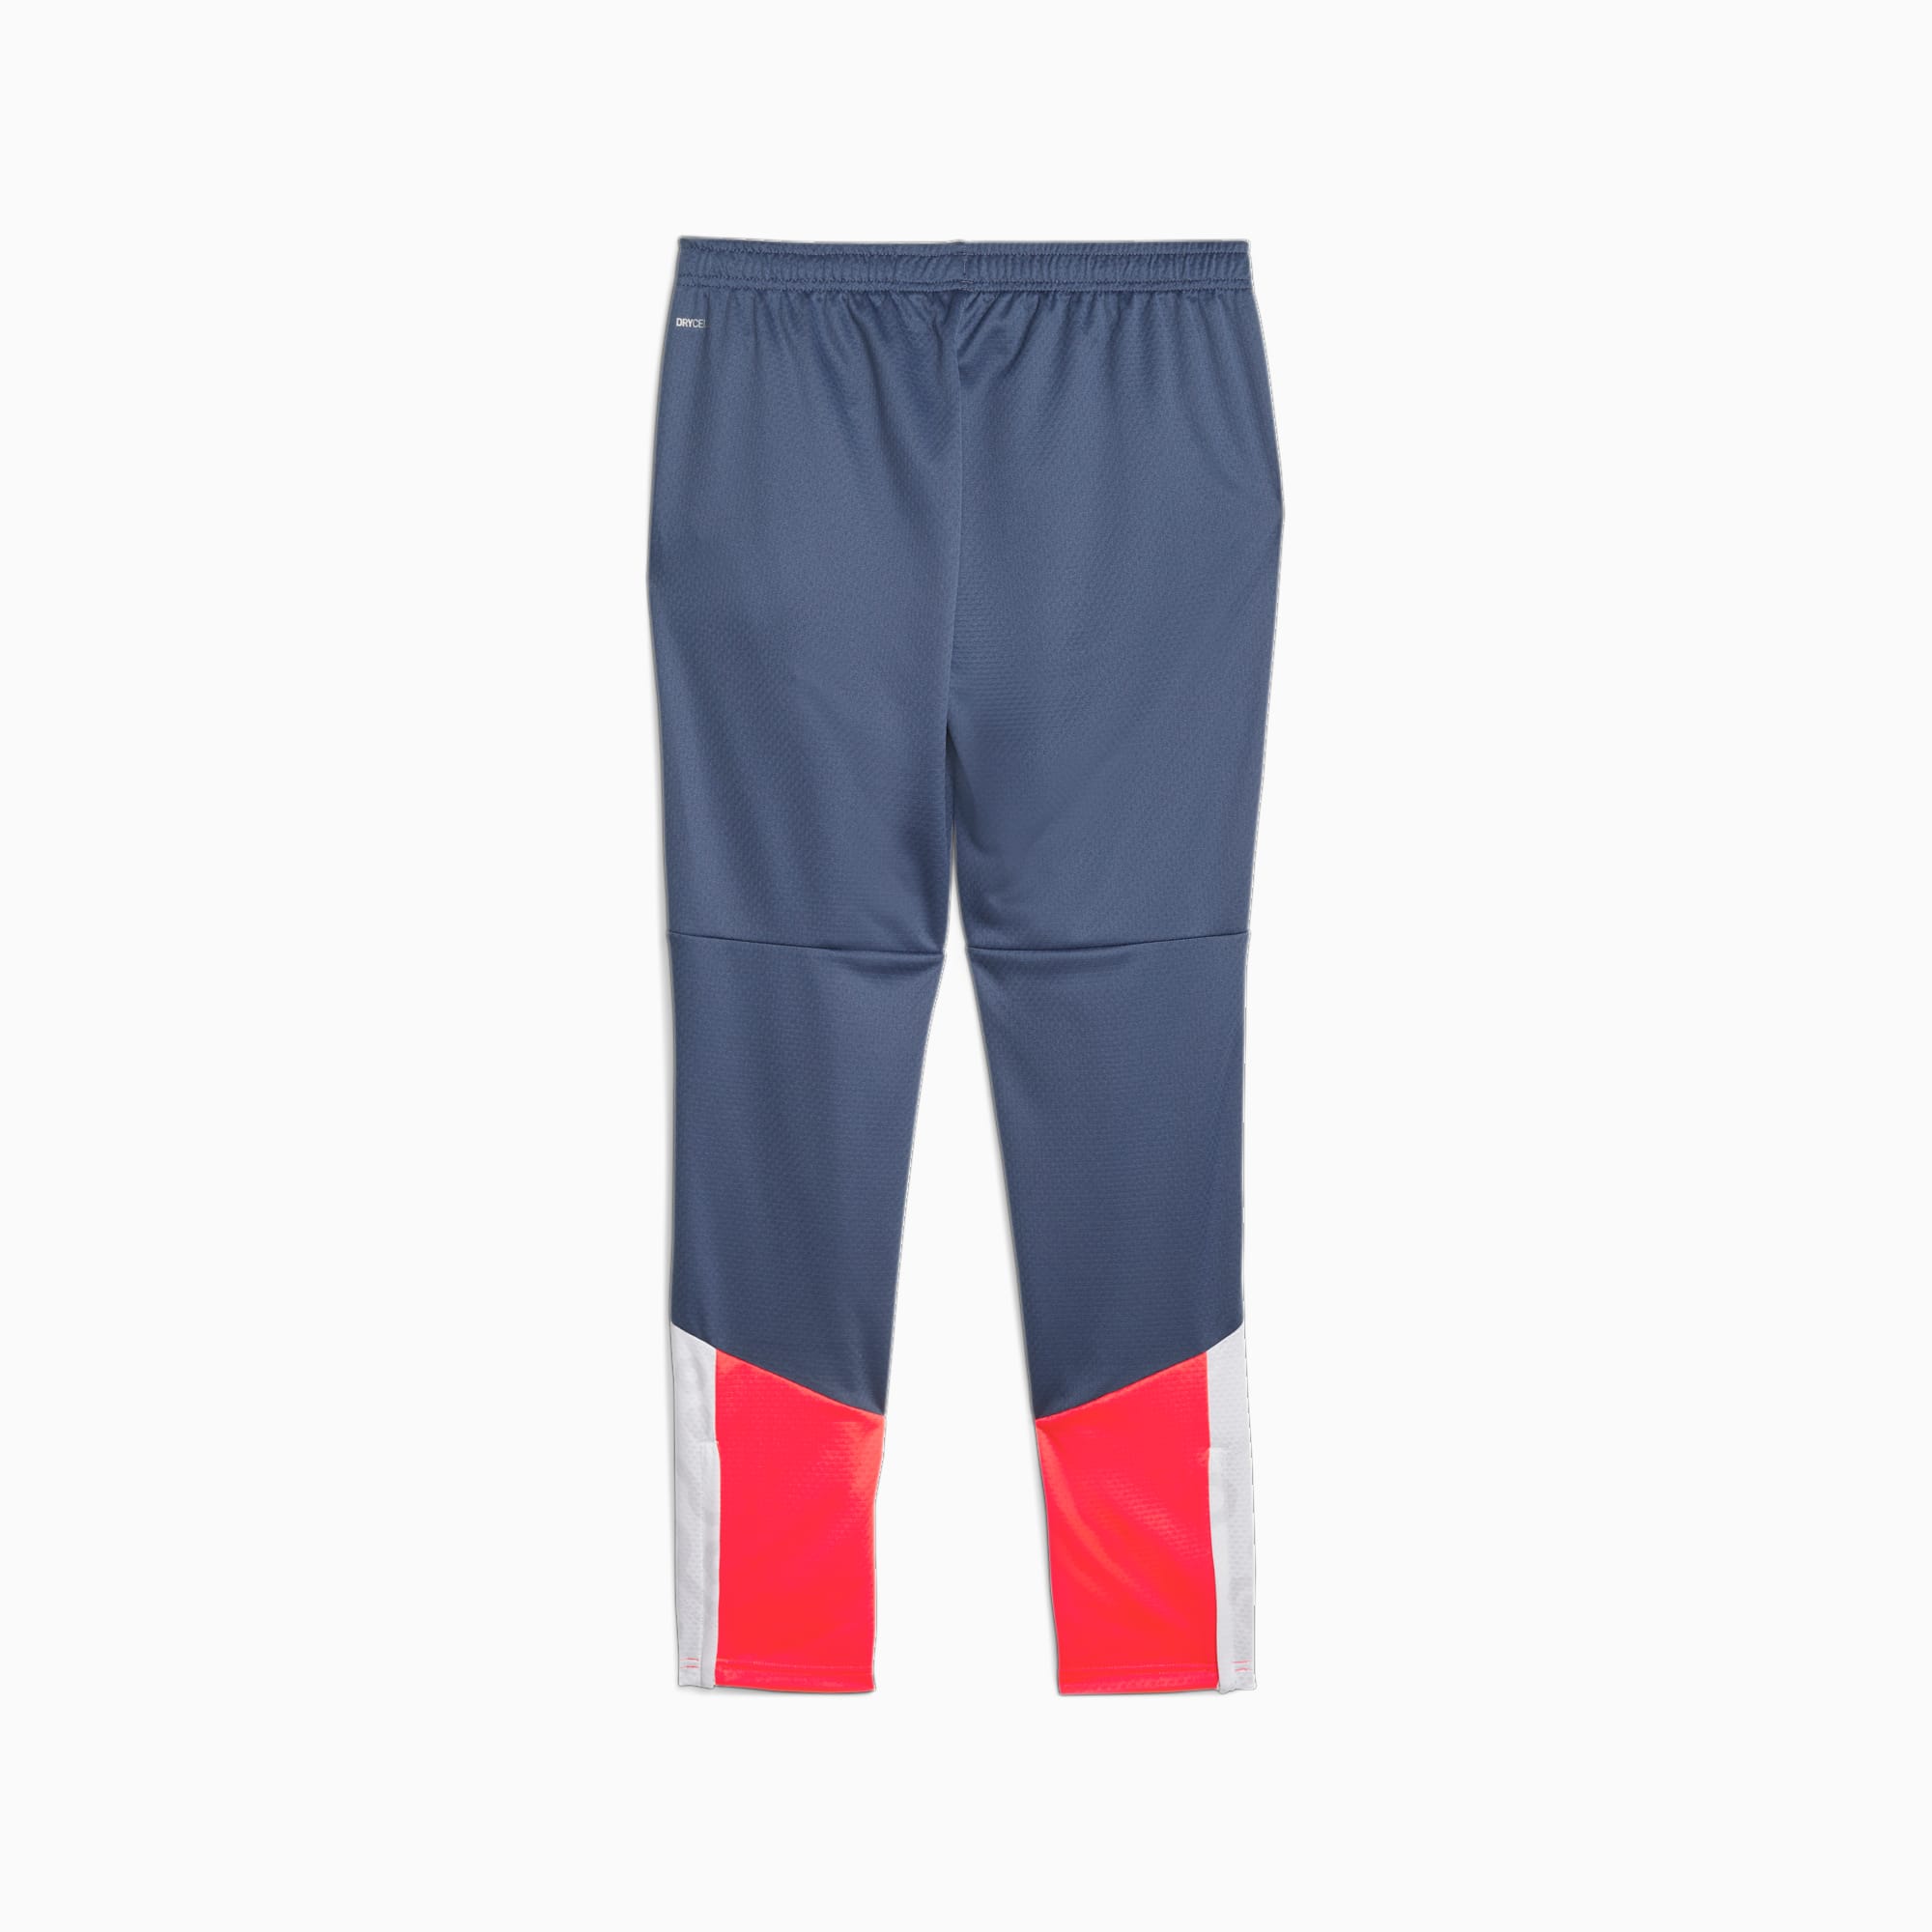 Men's PUMA Individualcup Football Training Pants, White/Inky Blue